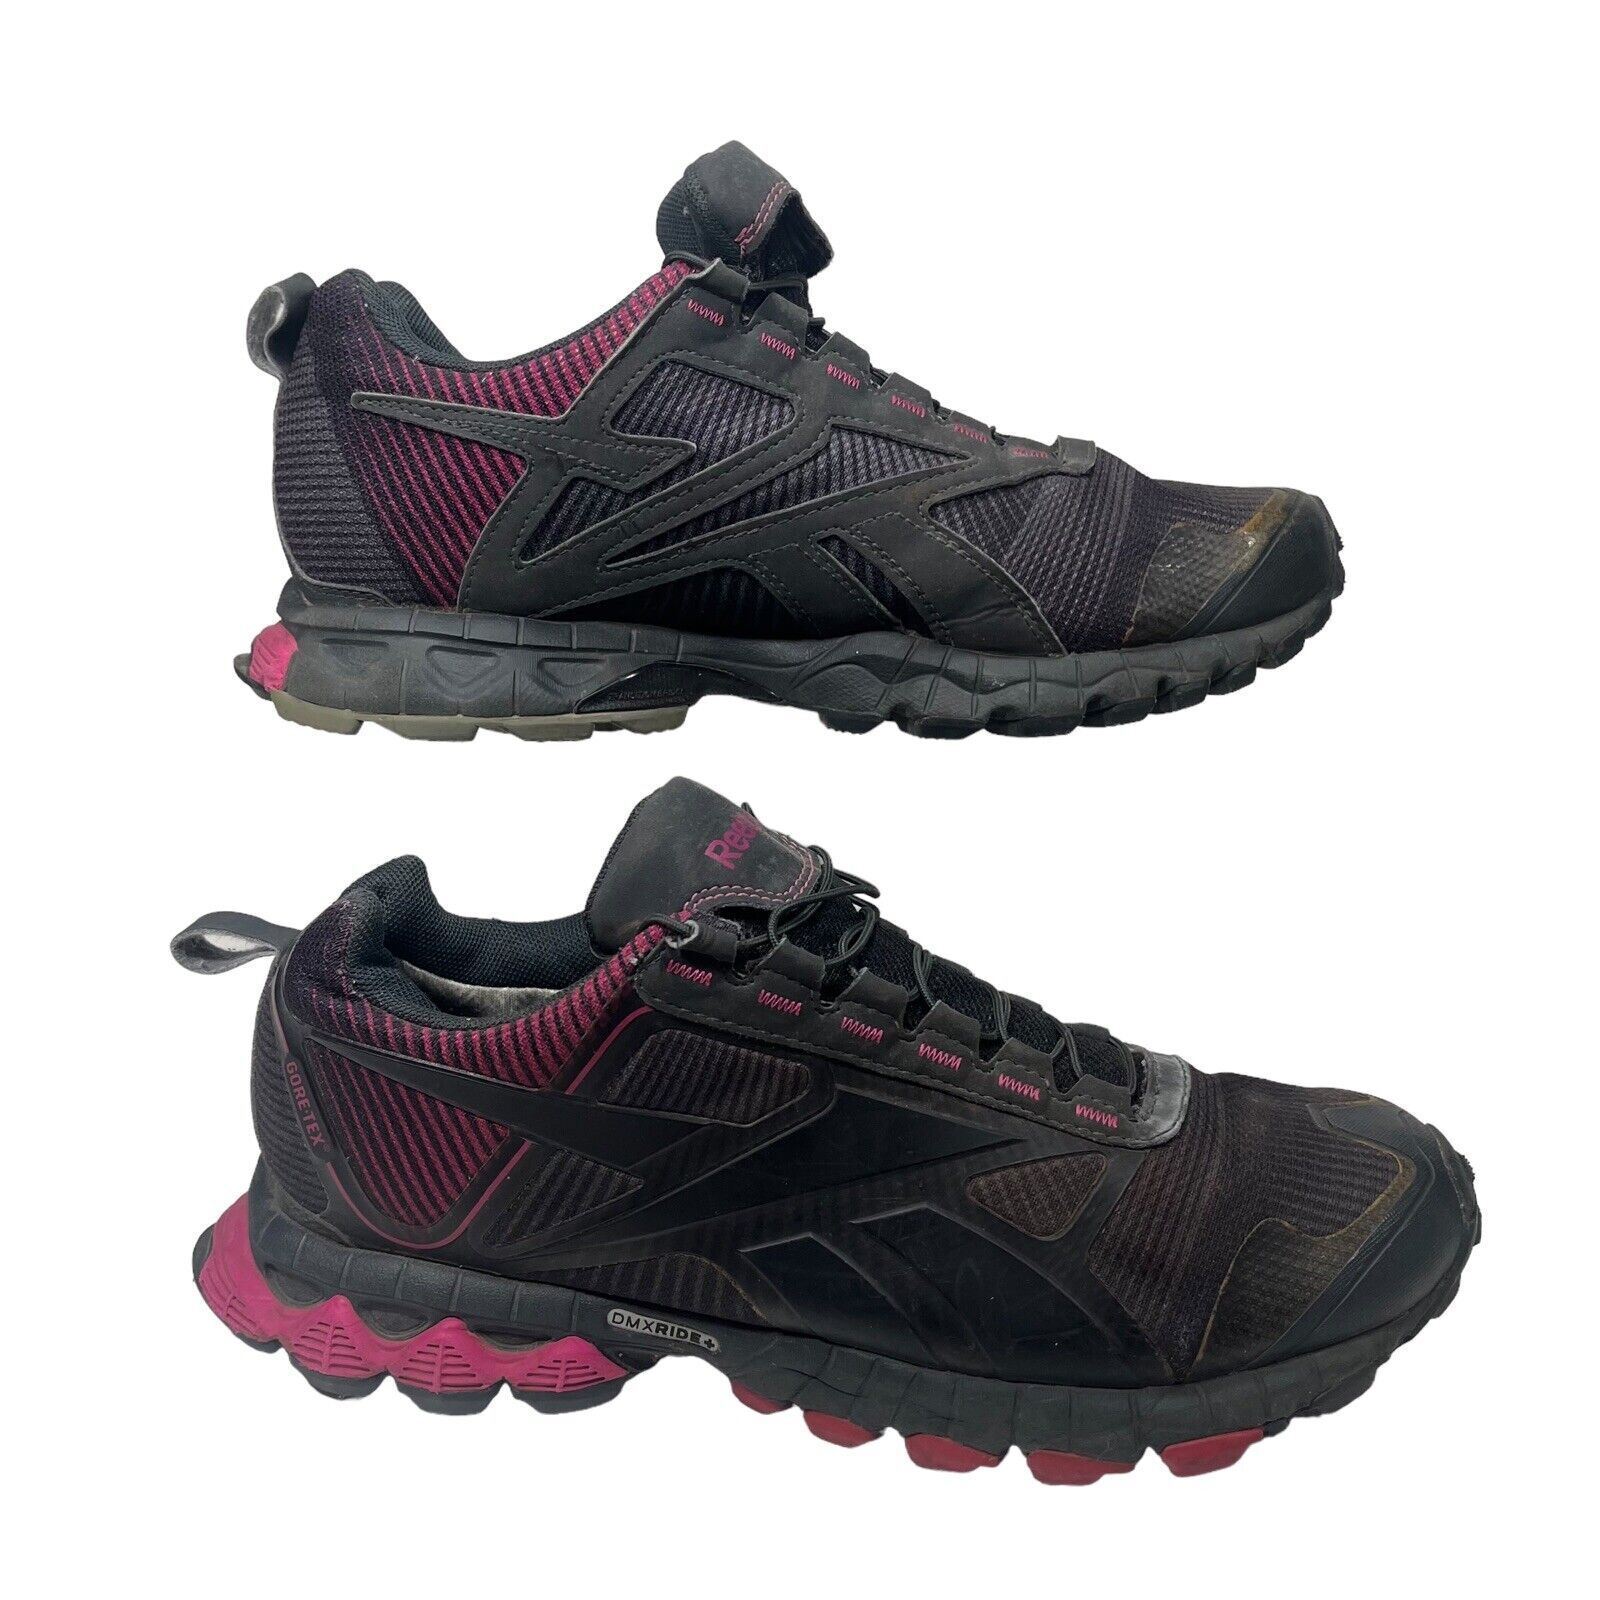 Reebok Gore-Tex RIDE Trainers Size 8.5 Women's Black Pink | eBay